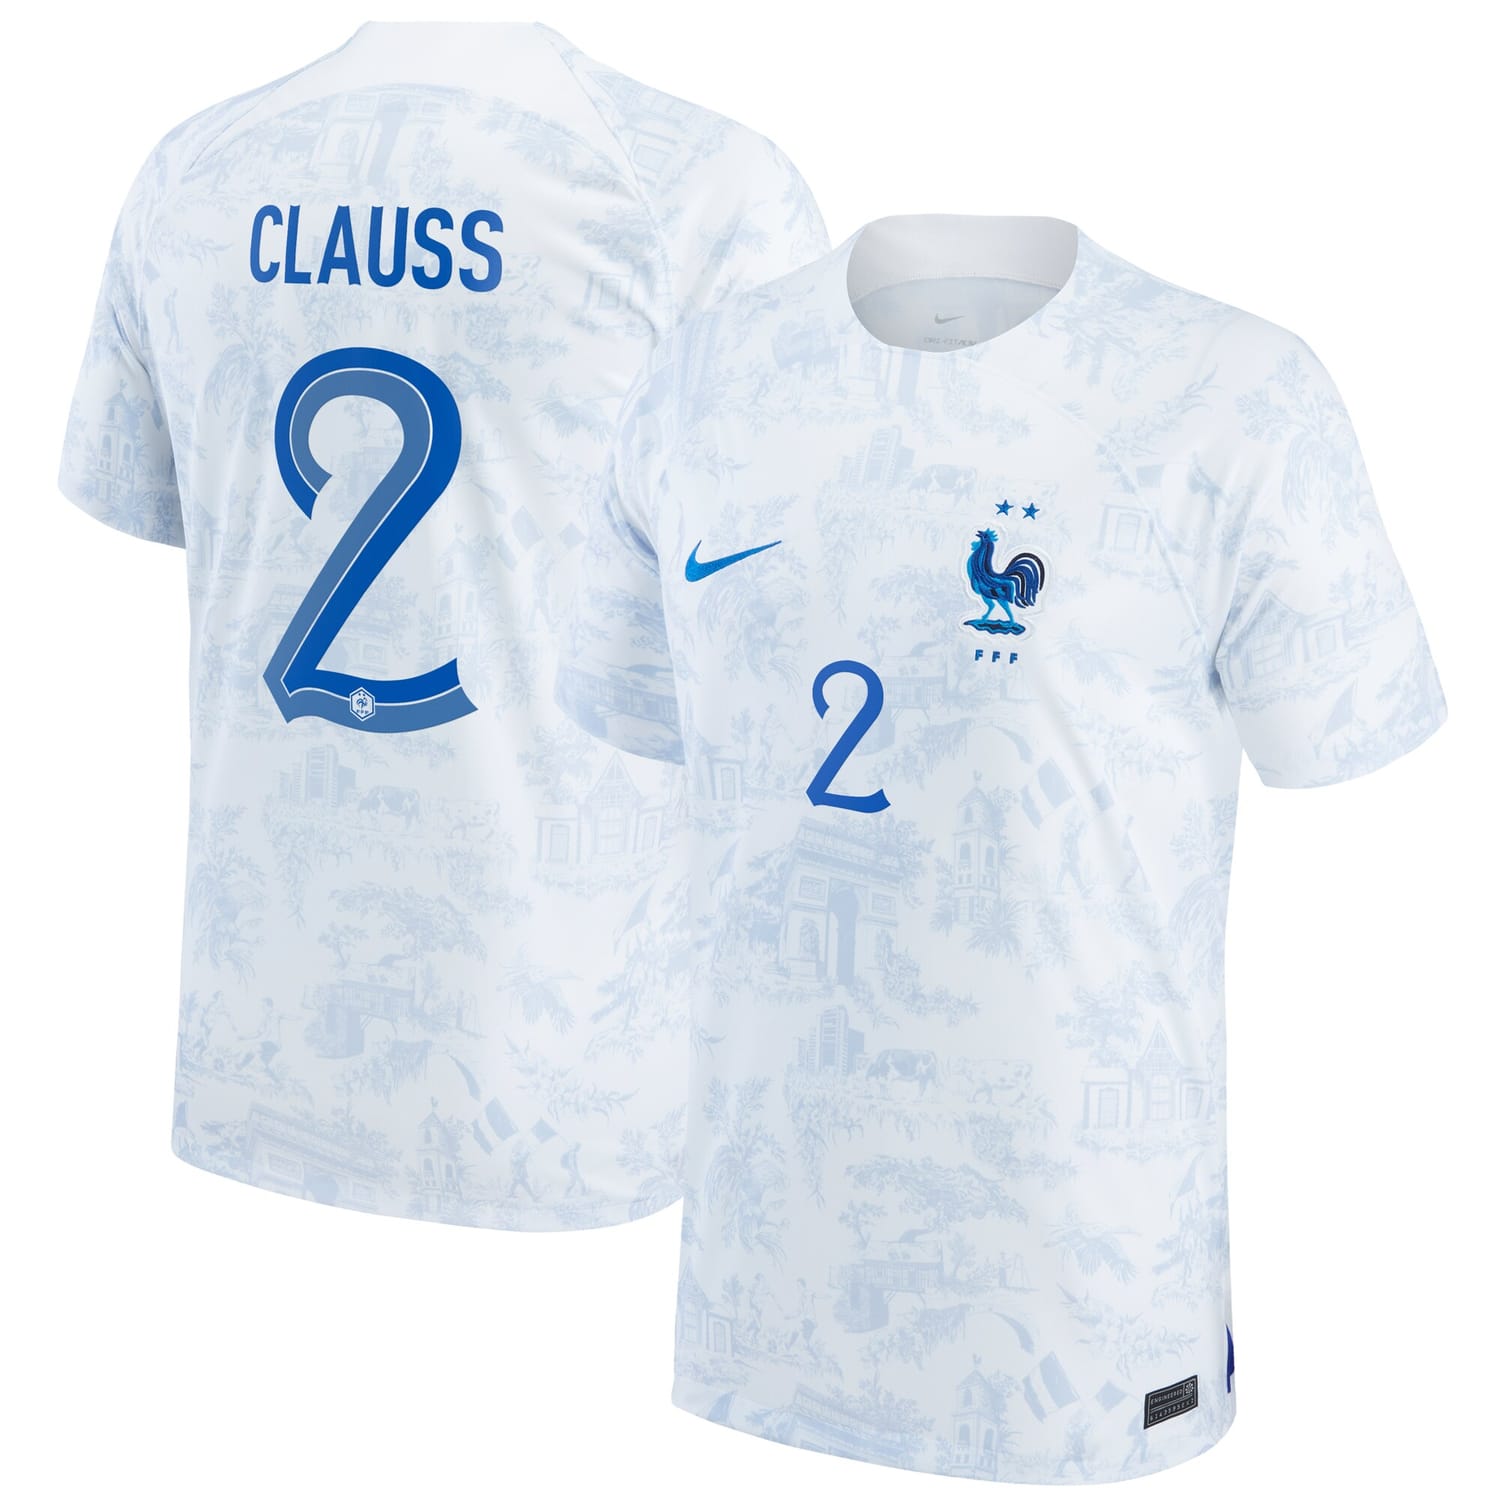 France National Team Away Jersey Shirt 2022 player Jonathan Clauss 2 printing for Men